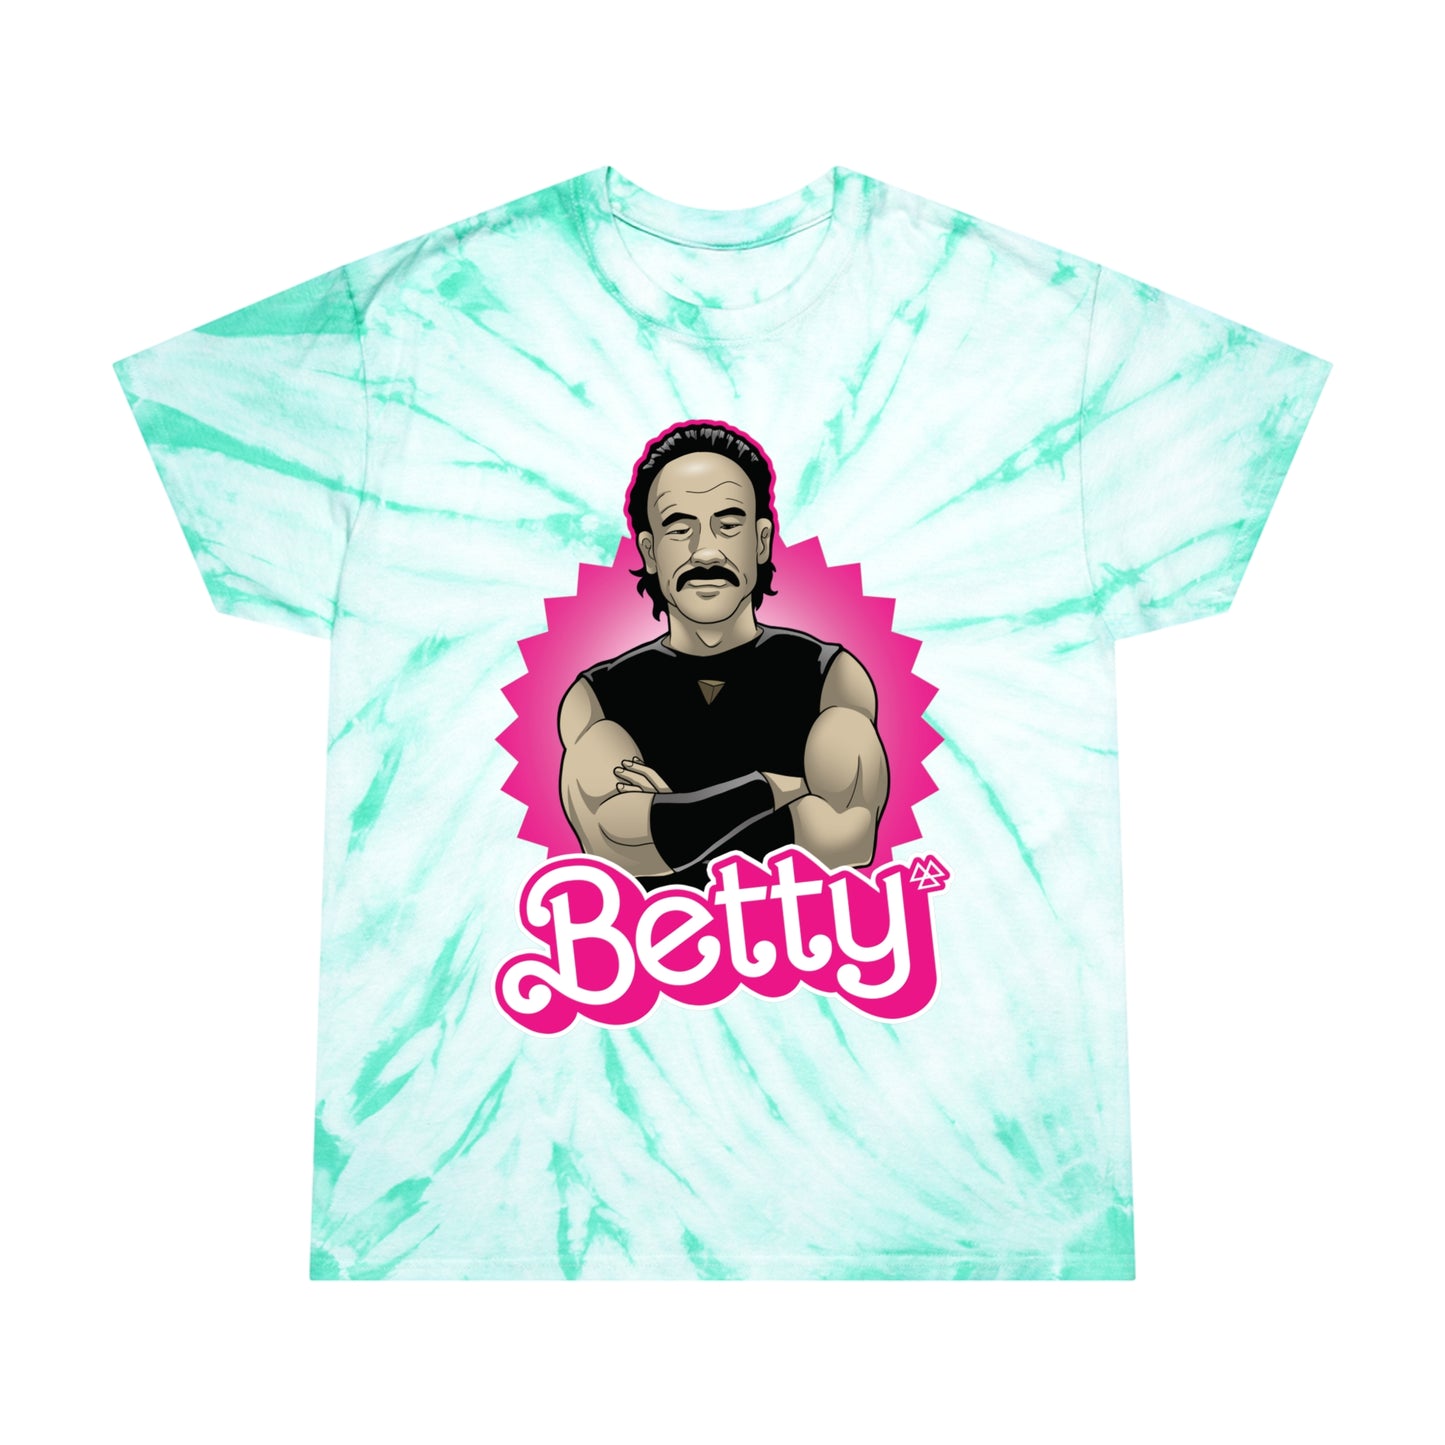 Betty Doll tie-dye t-shirt